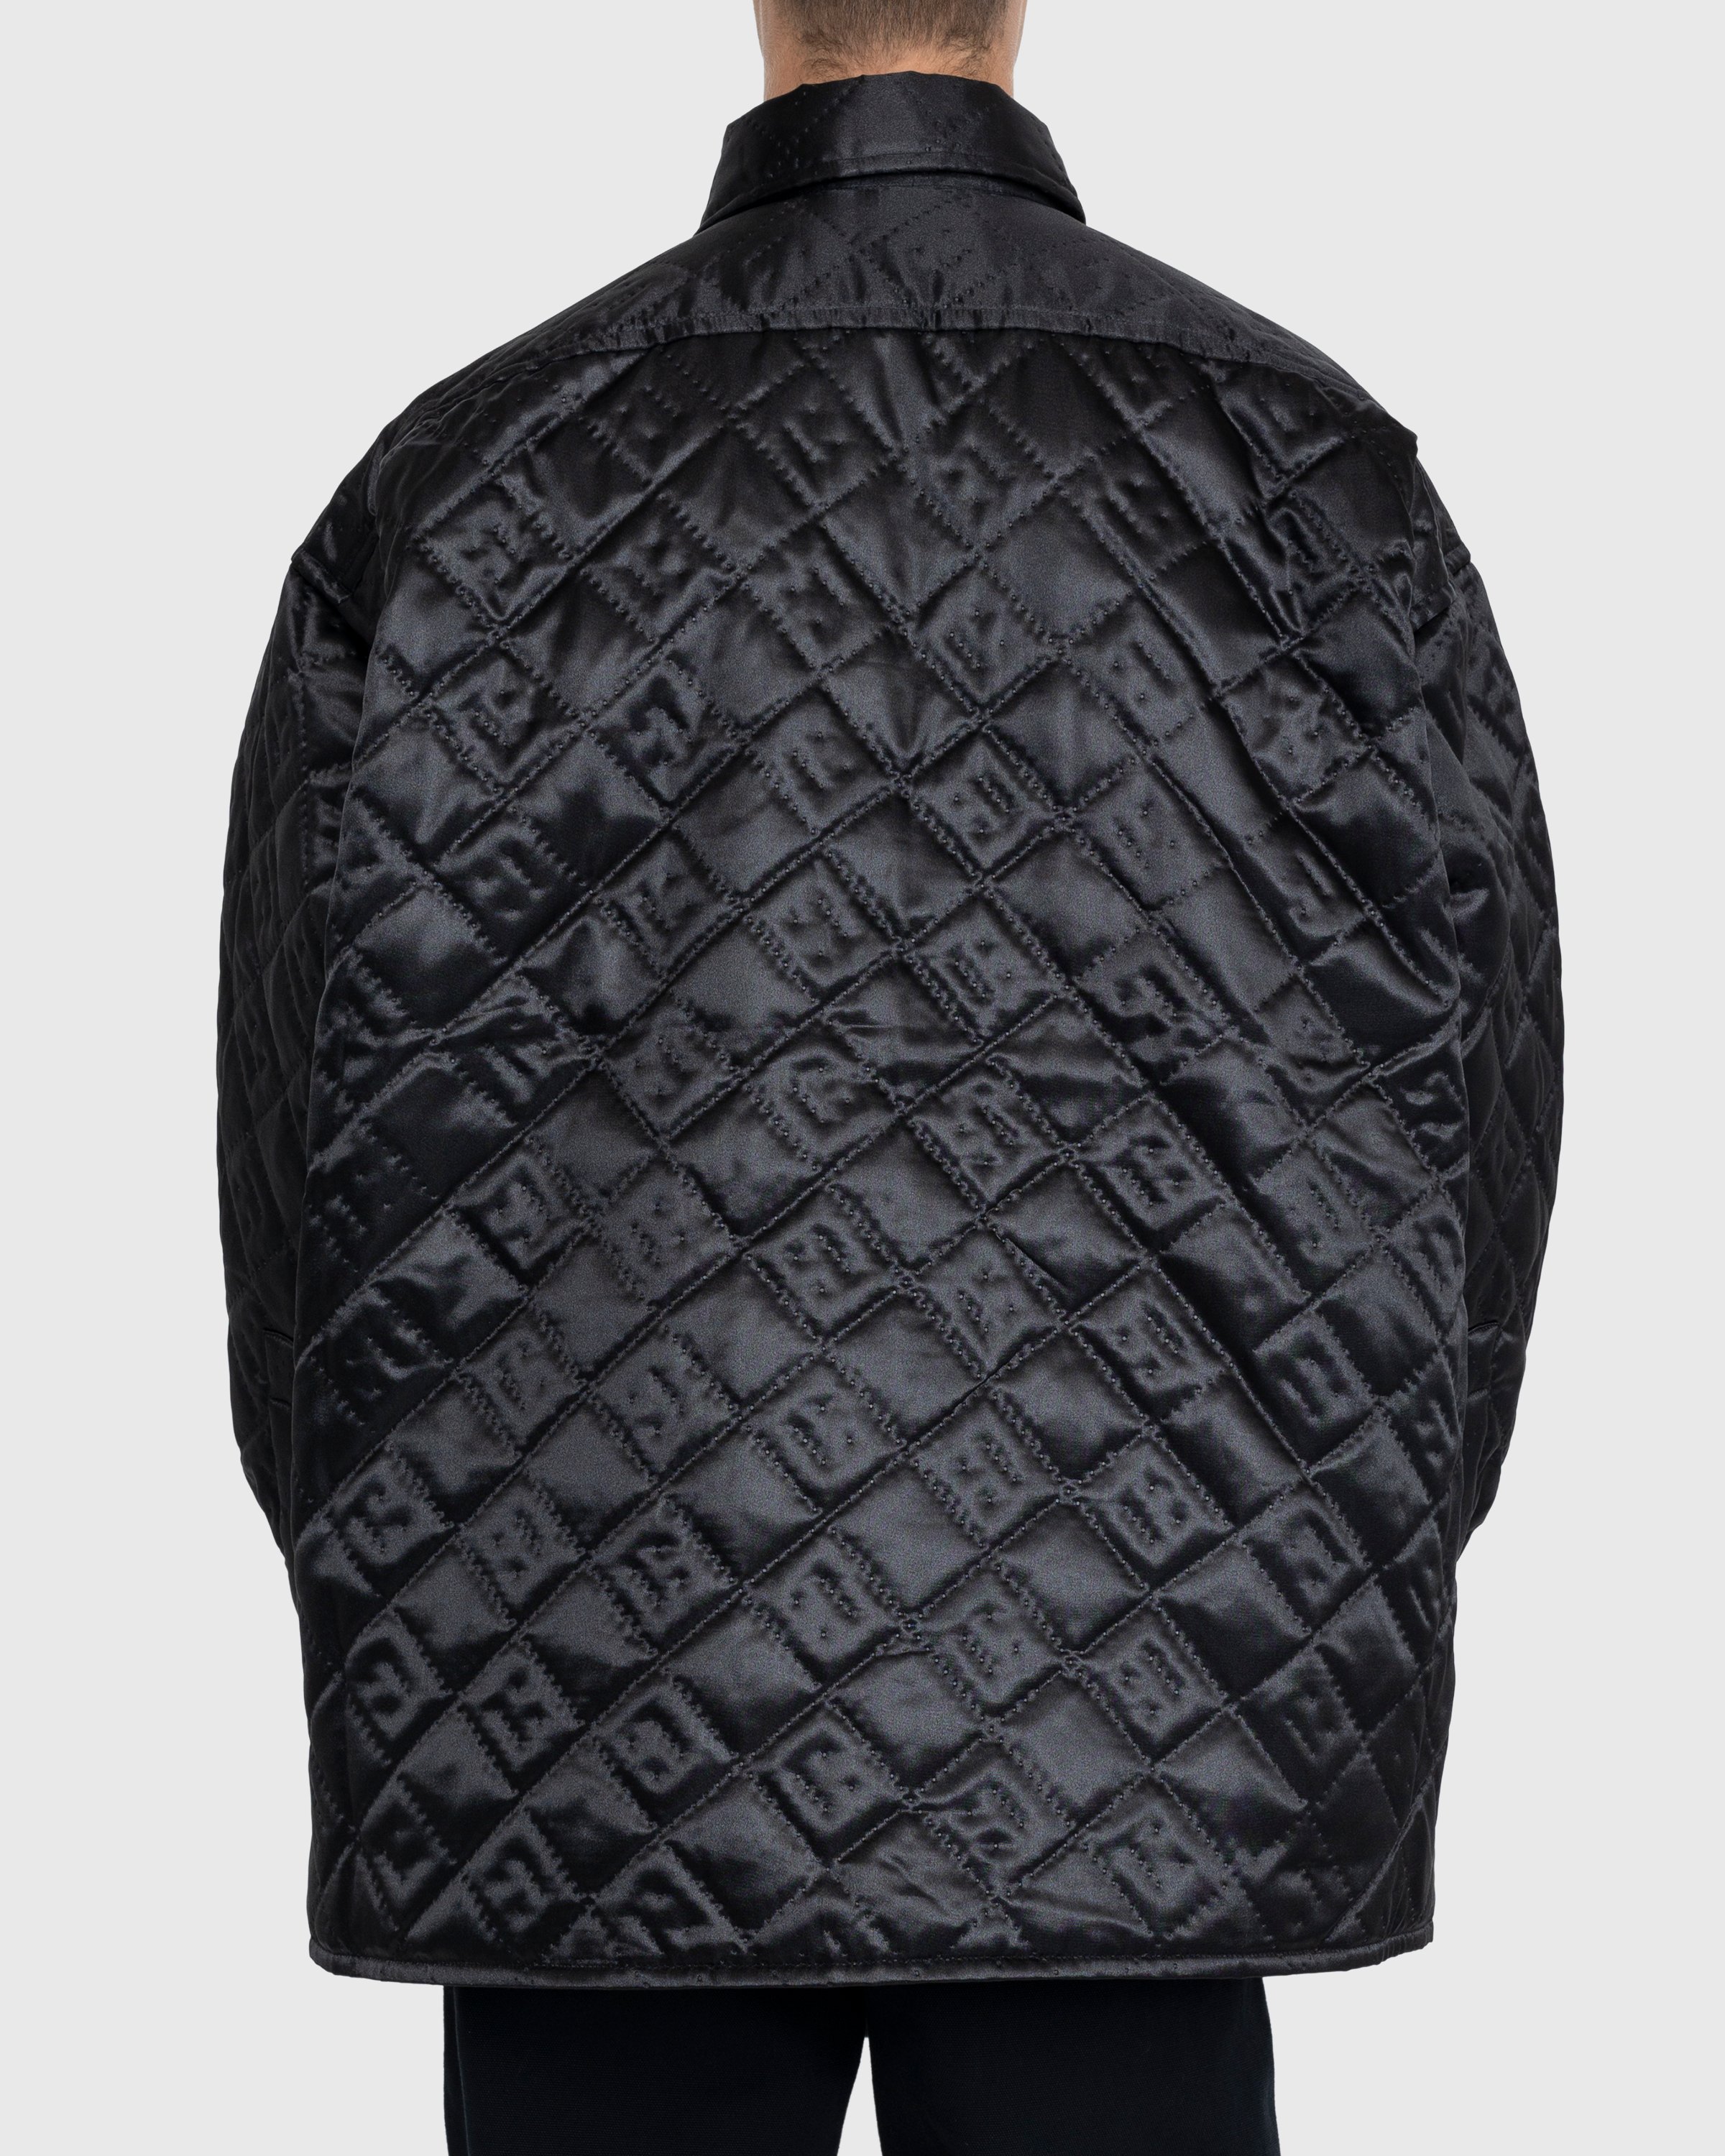 Acne Studios - Quilted Satin Jacket Black - Clothing - Black - Image 4